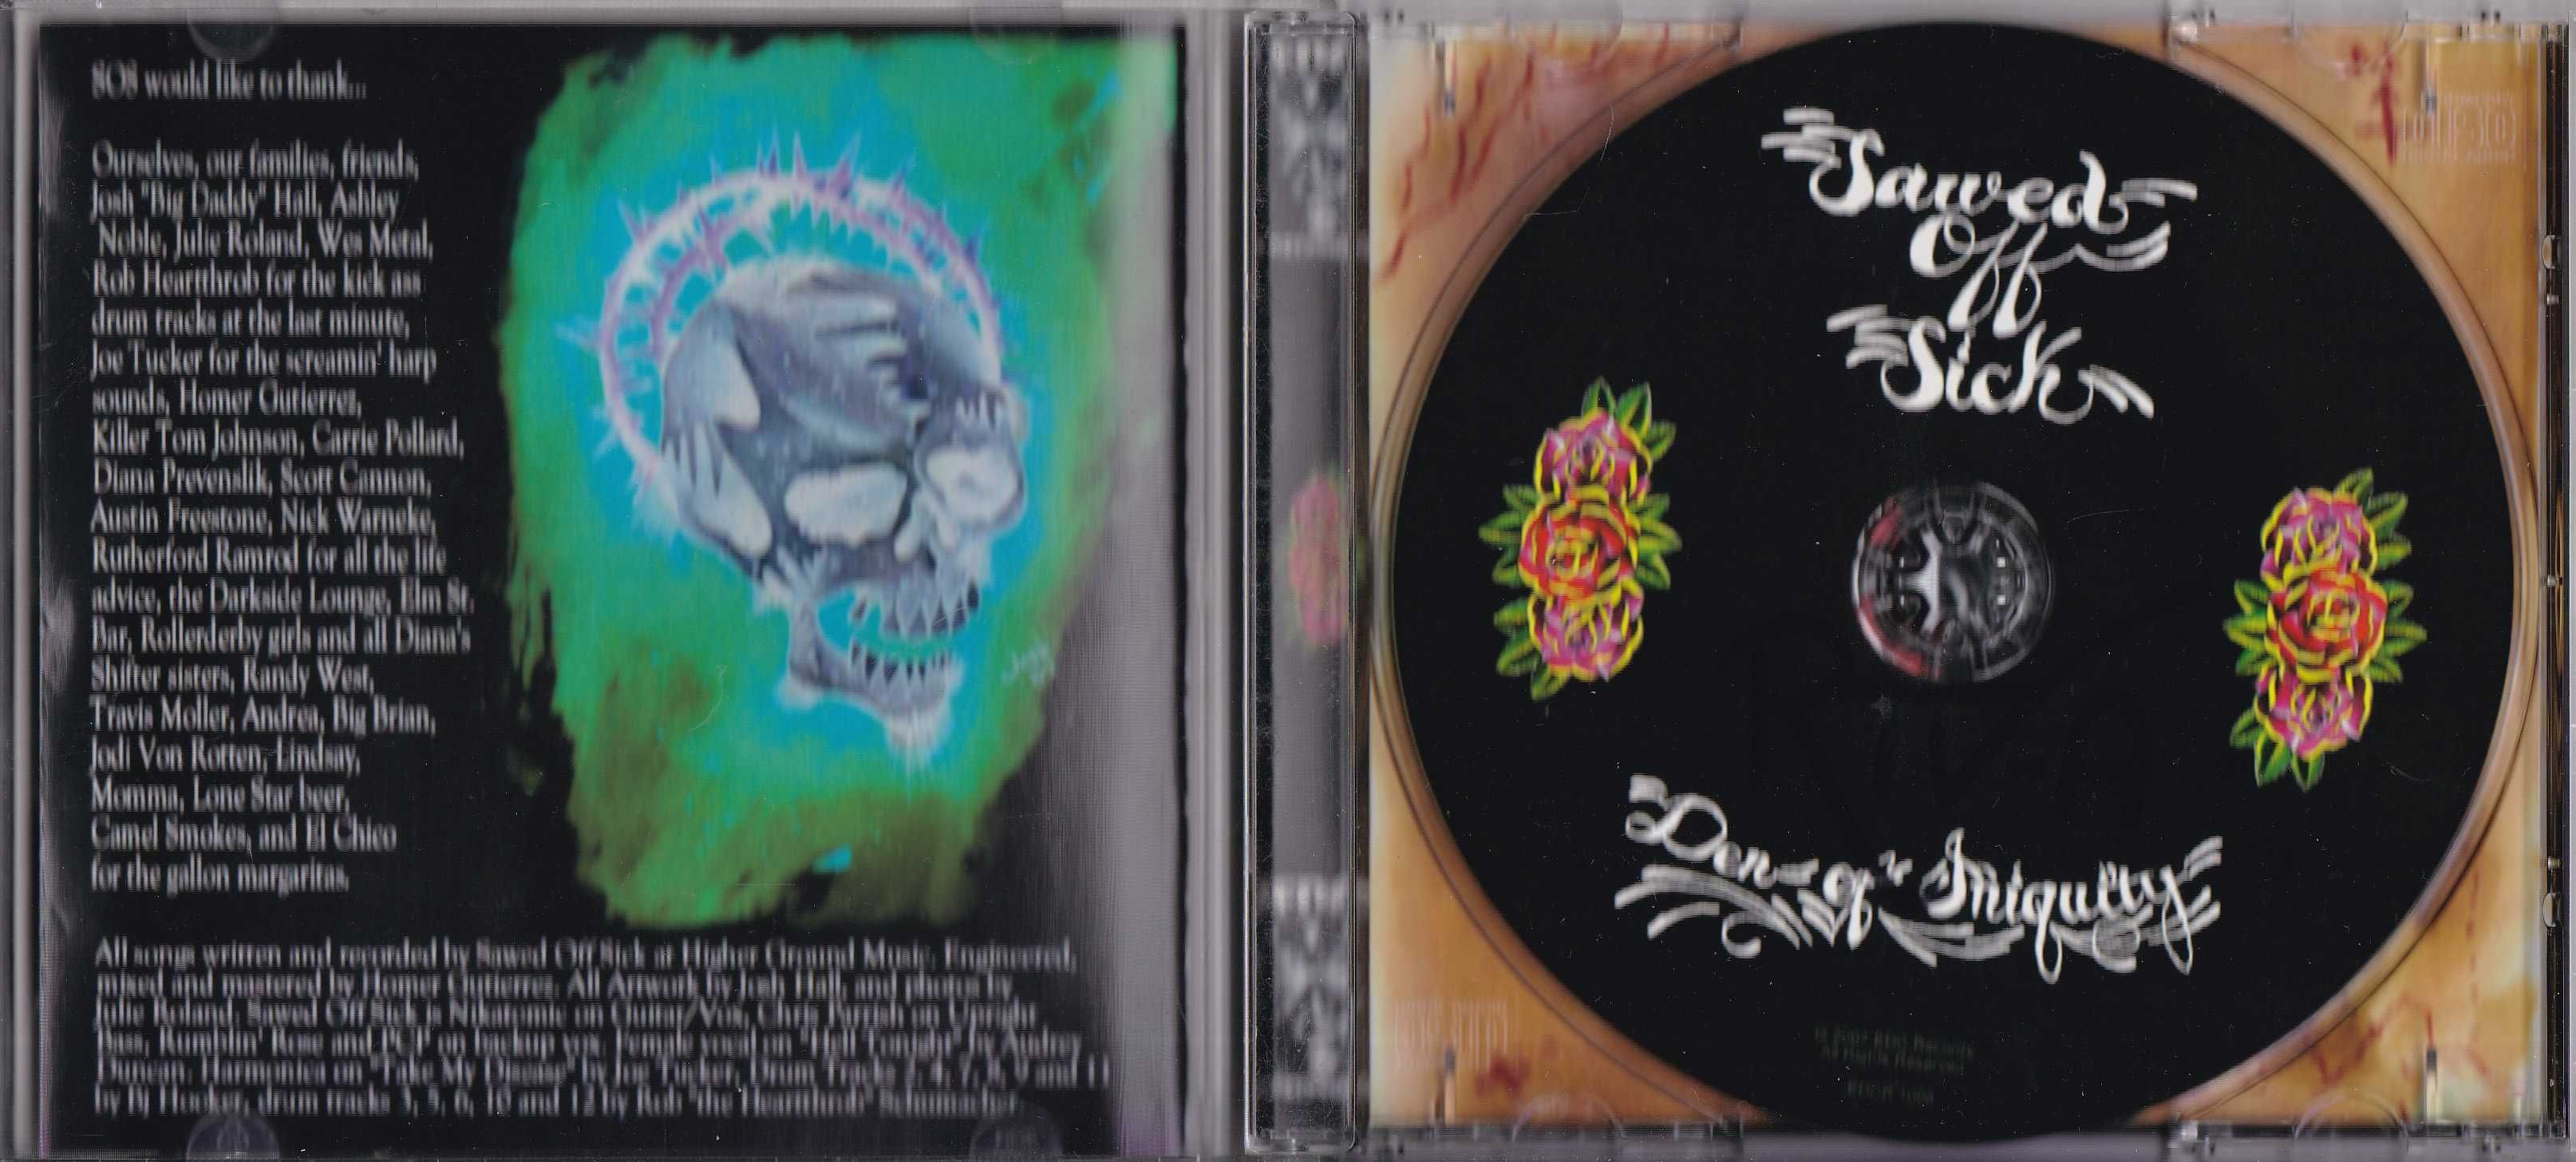 Den of Iniquity - 
                          	Sawed Off Sick   CD